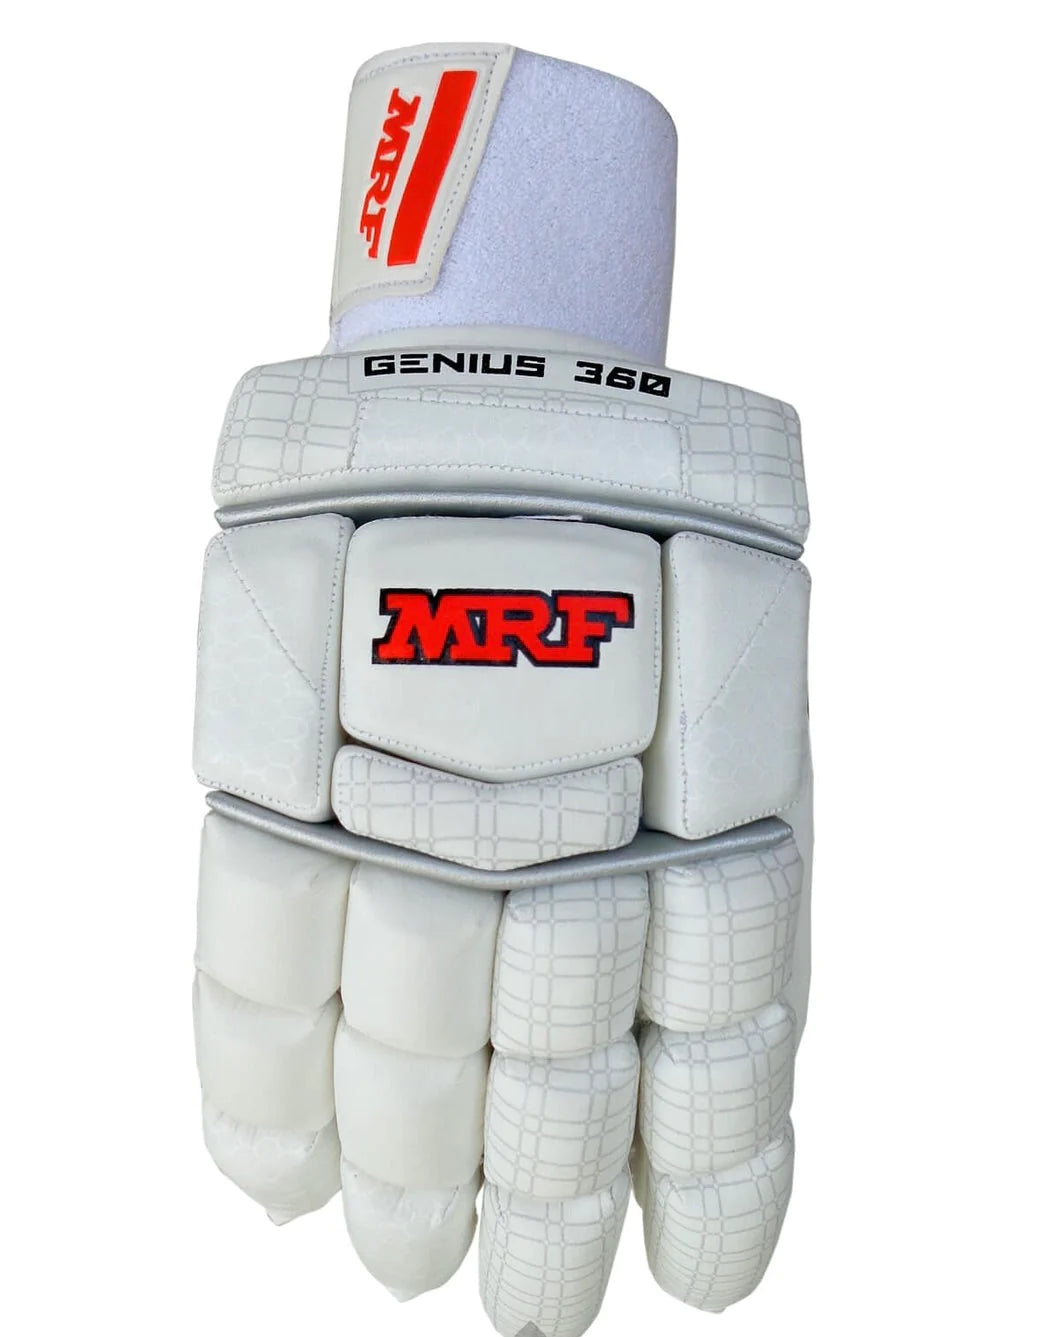 MRF Genius 360 Adult Cricket Batting Gloves